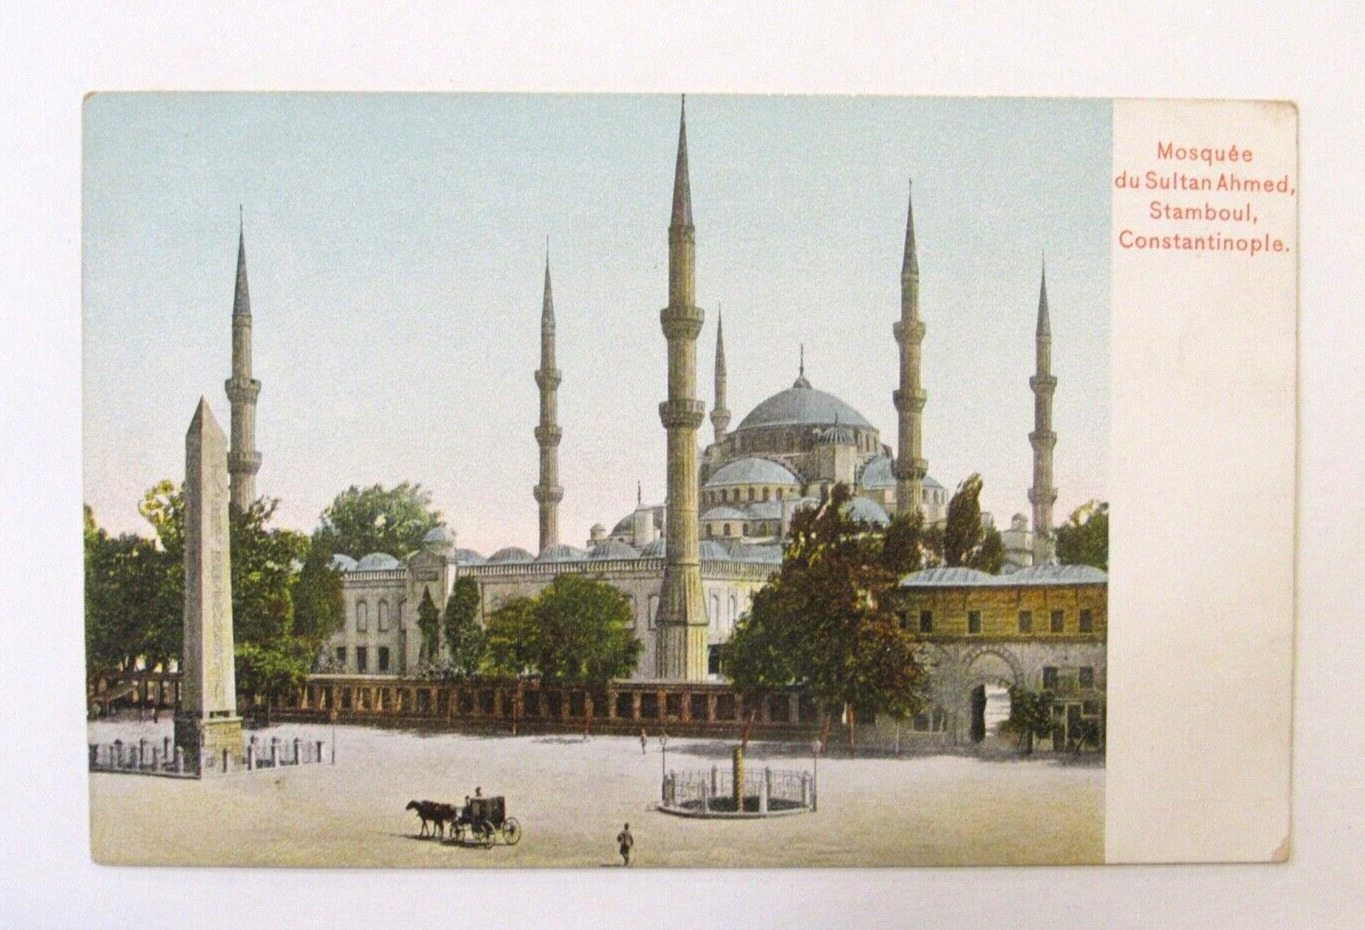 Stamboul Constantinople Turkey Postcard Mosque Du Sultan Ahmed c1910 ANTQUE